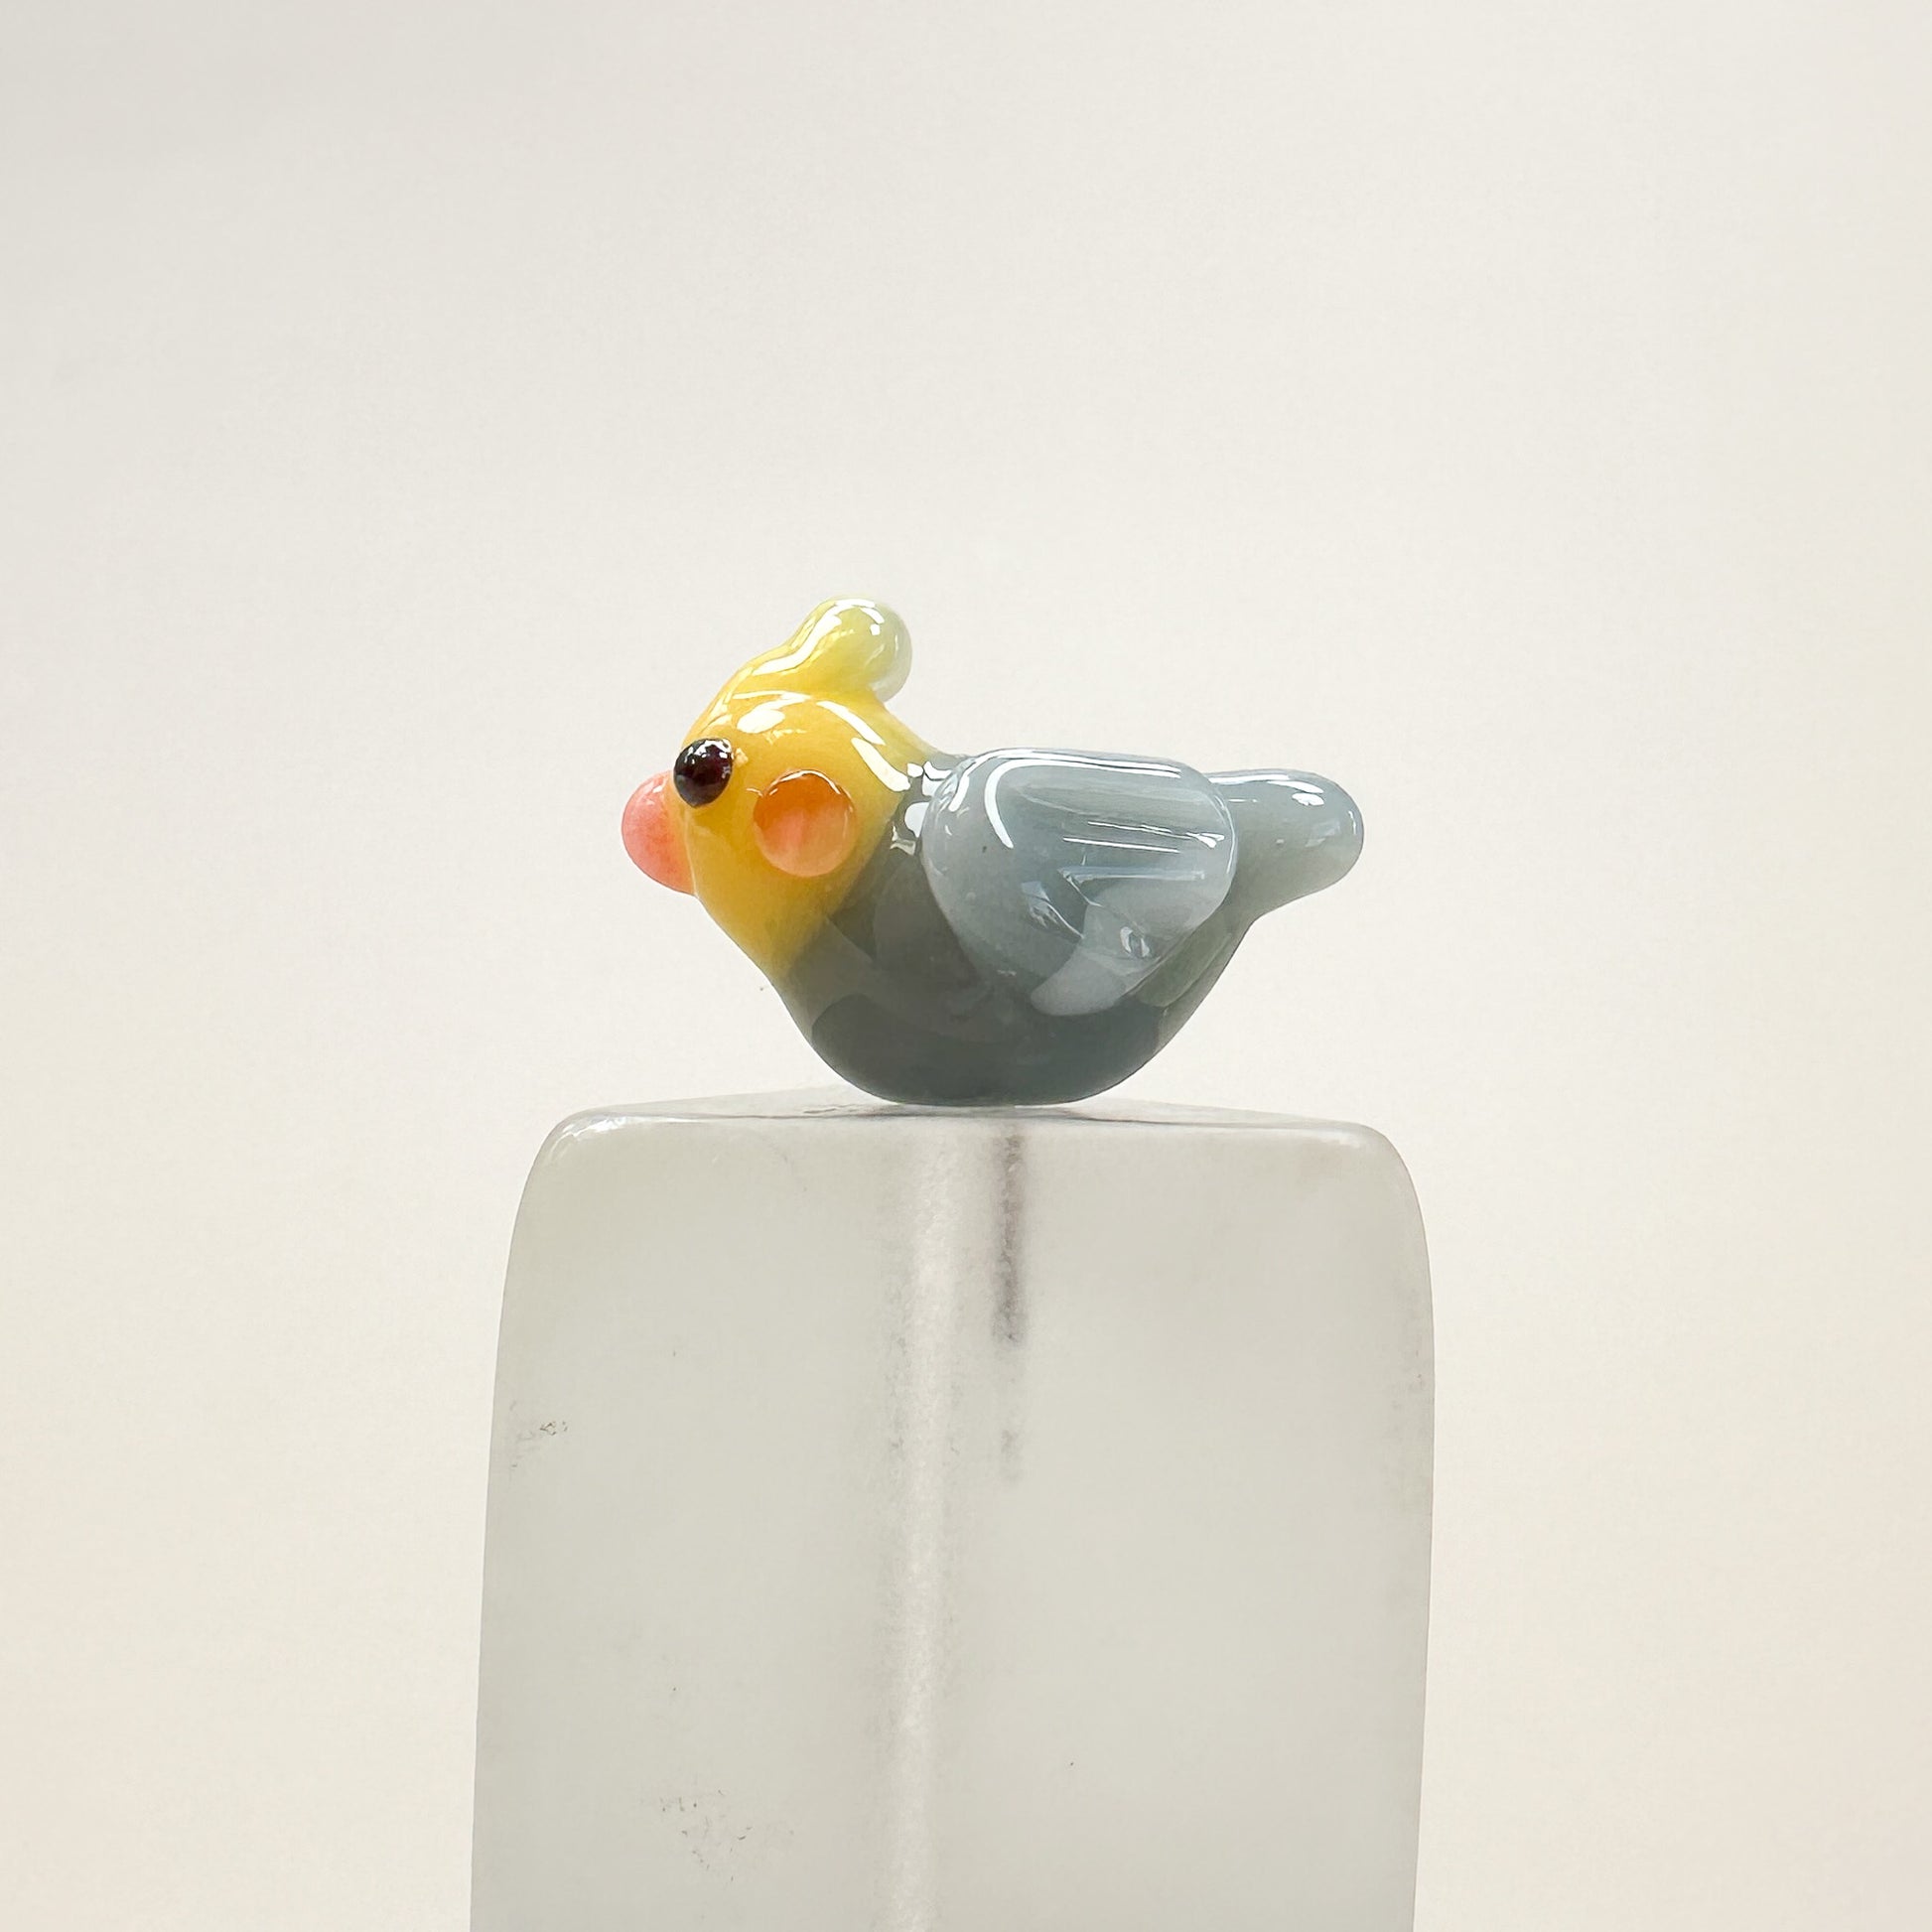 Chibi Handmade Glass Beads - Bird Shape Cockatiel-The Bead Gallery Honolulu